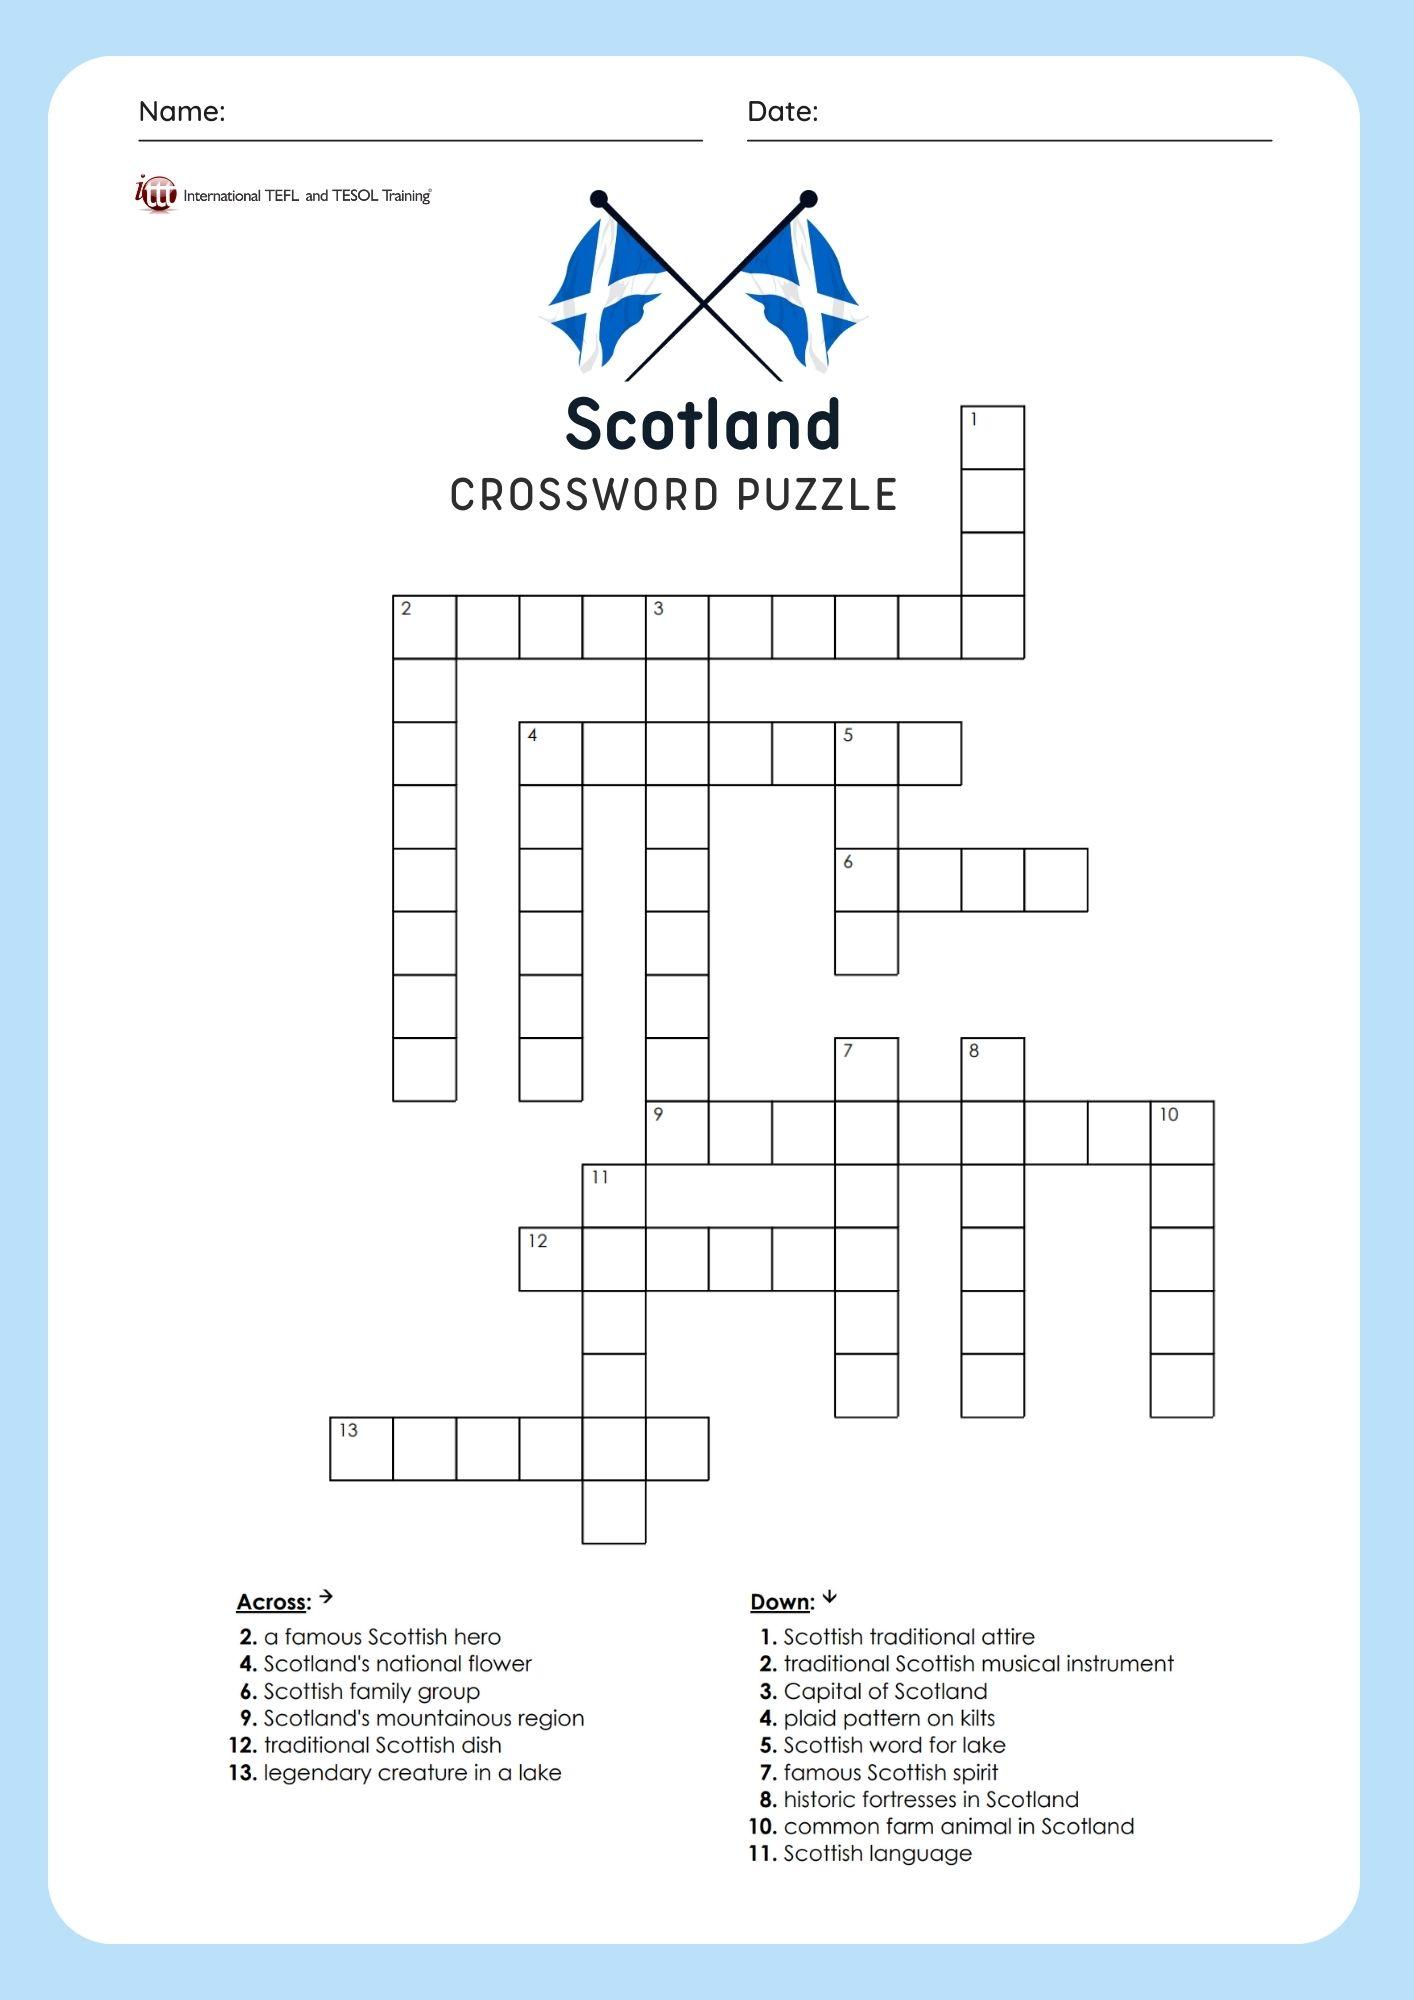 Grammar corner EFL Scotland Vocabulary Crossword Puzzle